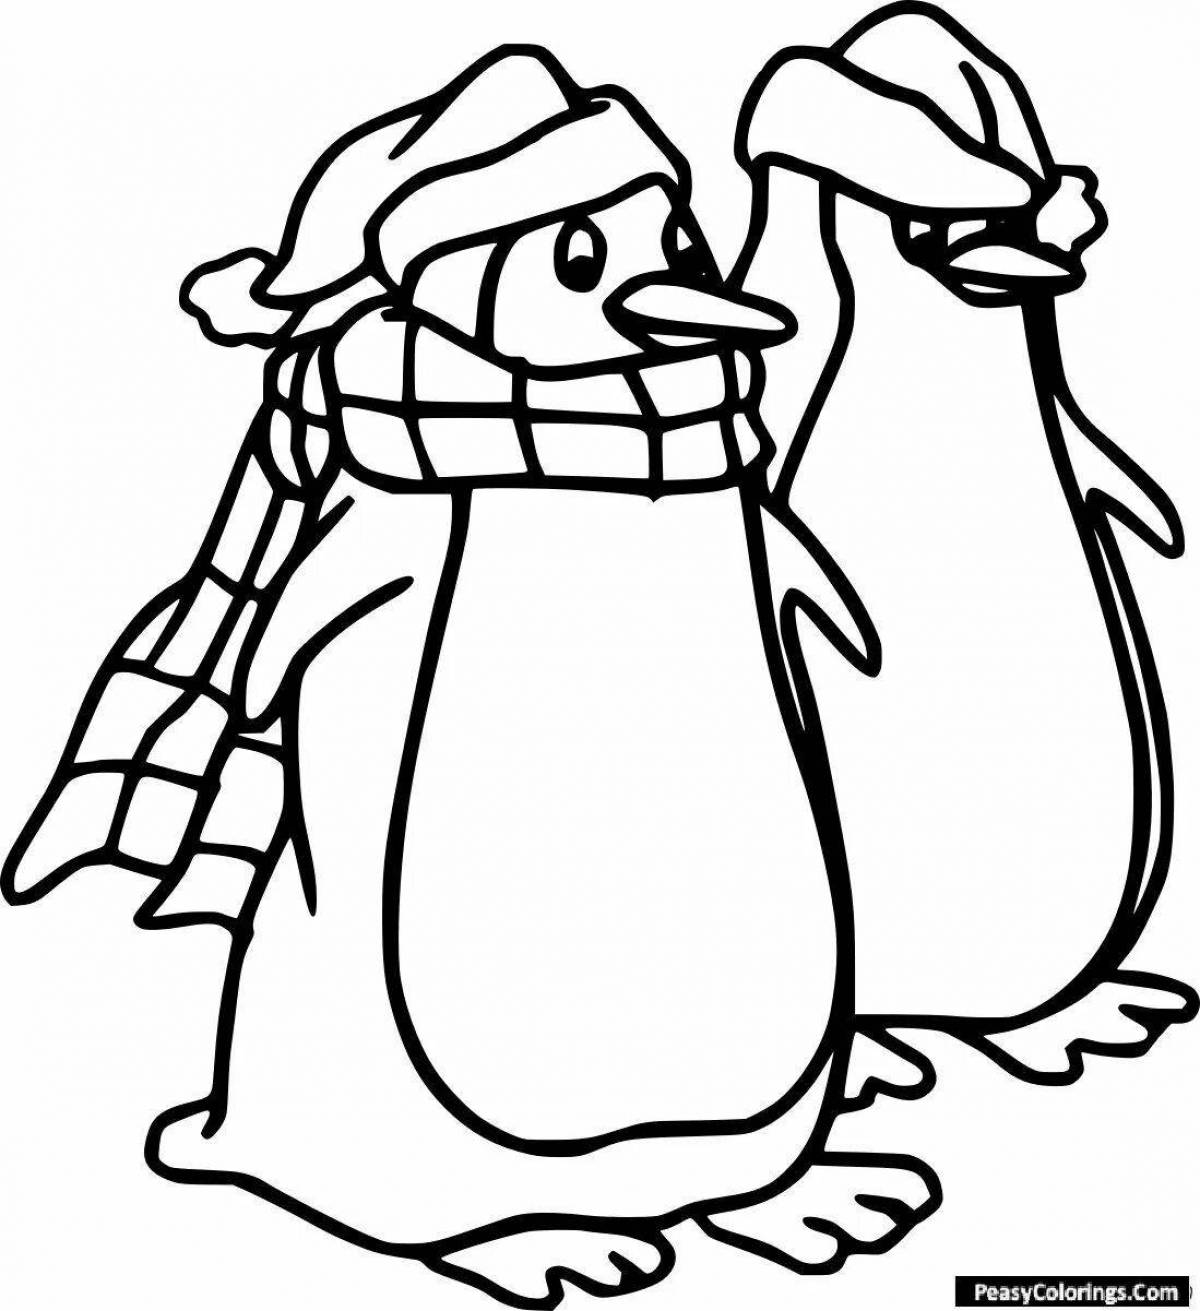 Playful penguin coloring book